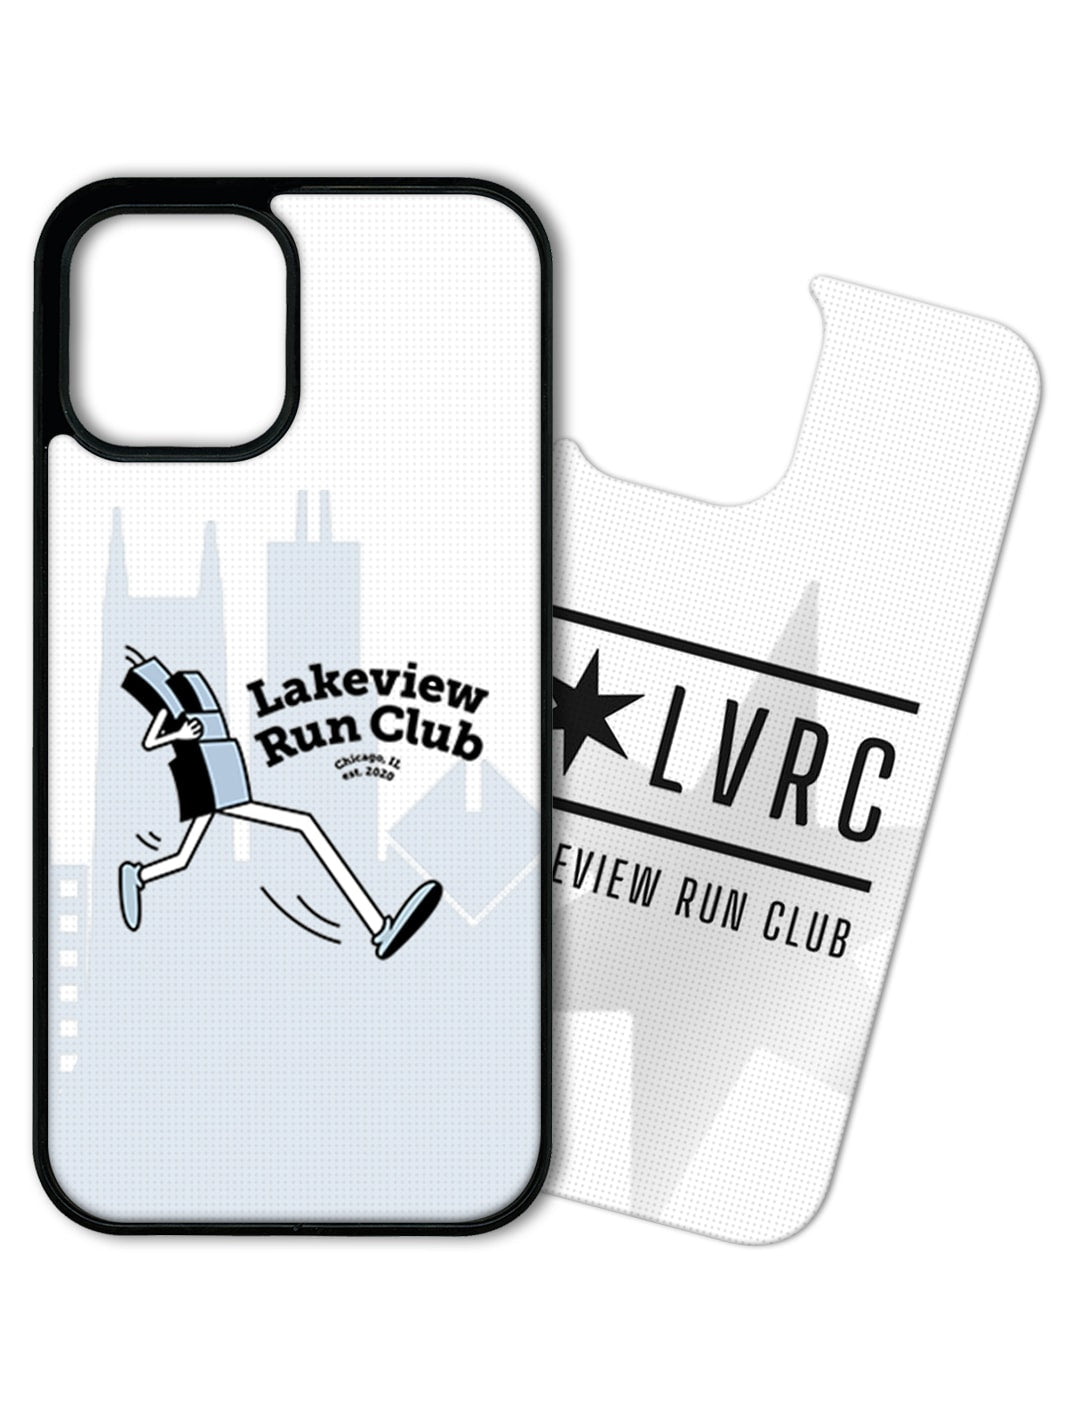 Phone Case Set - Lakeview Run Club 2